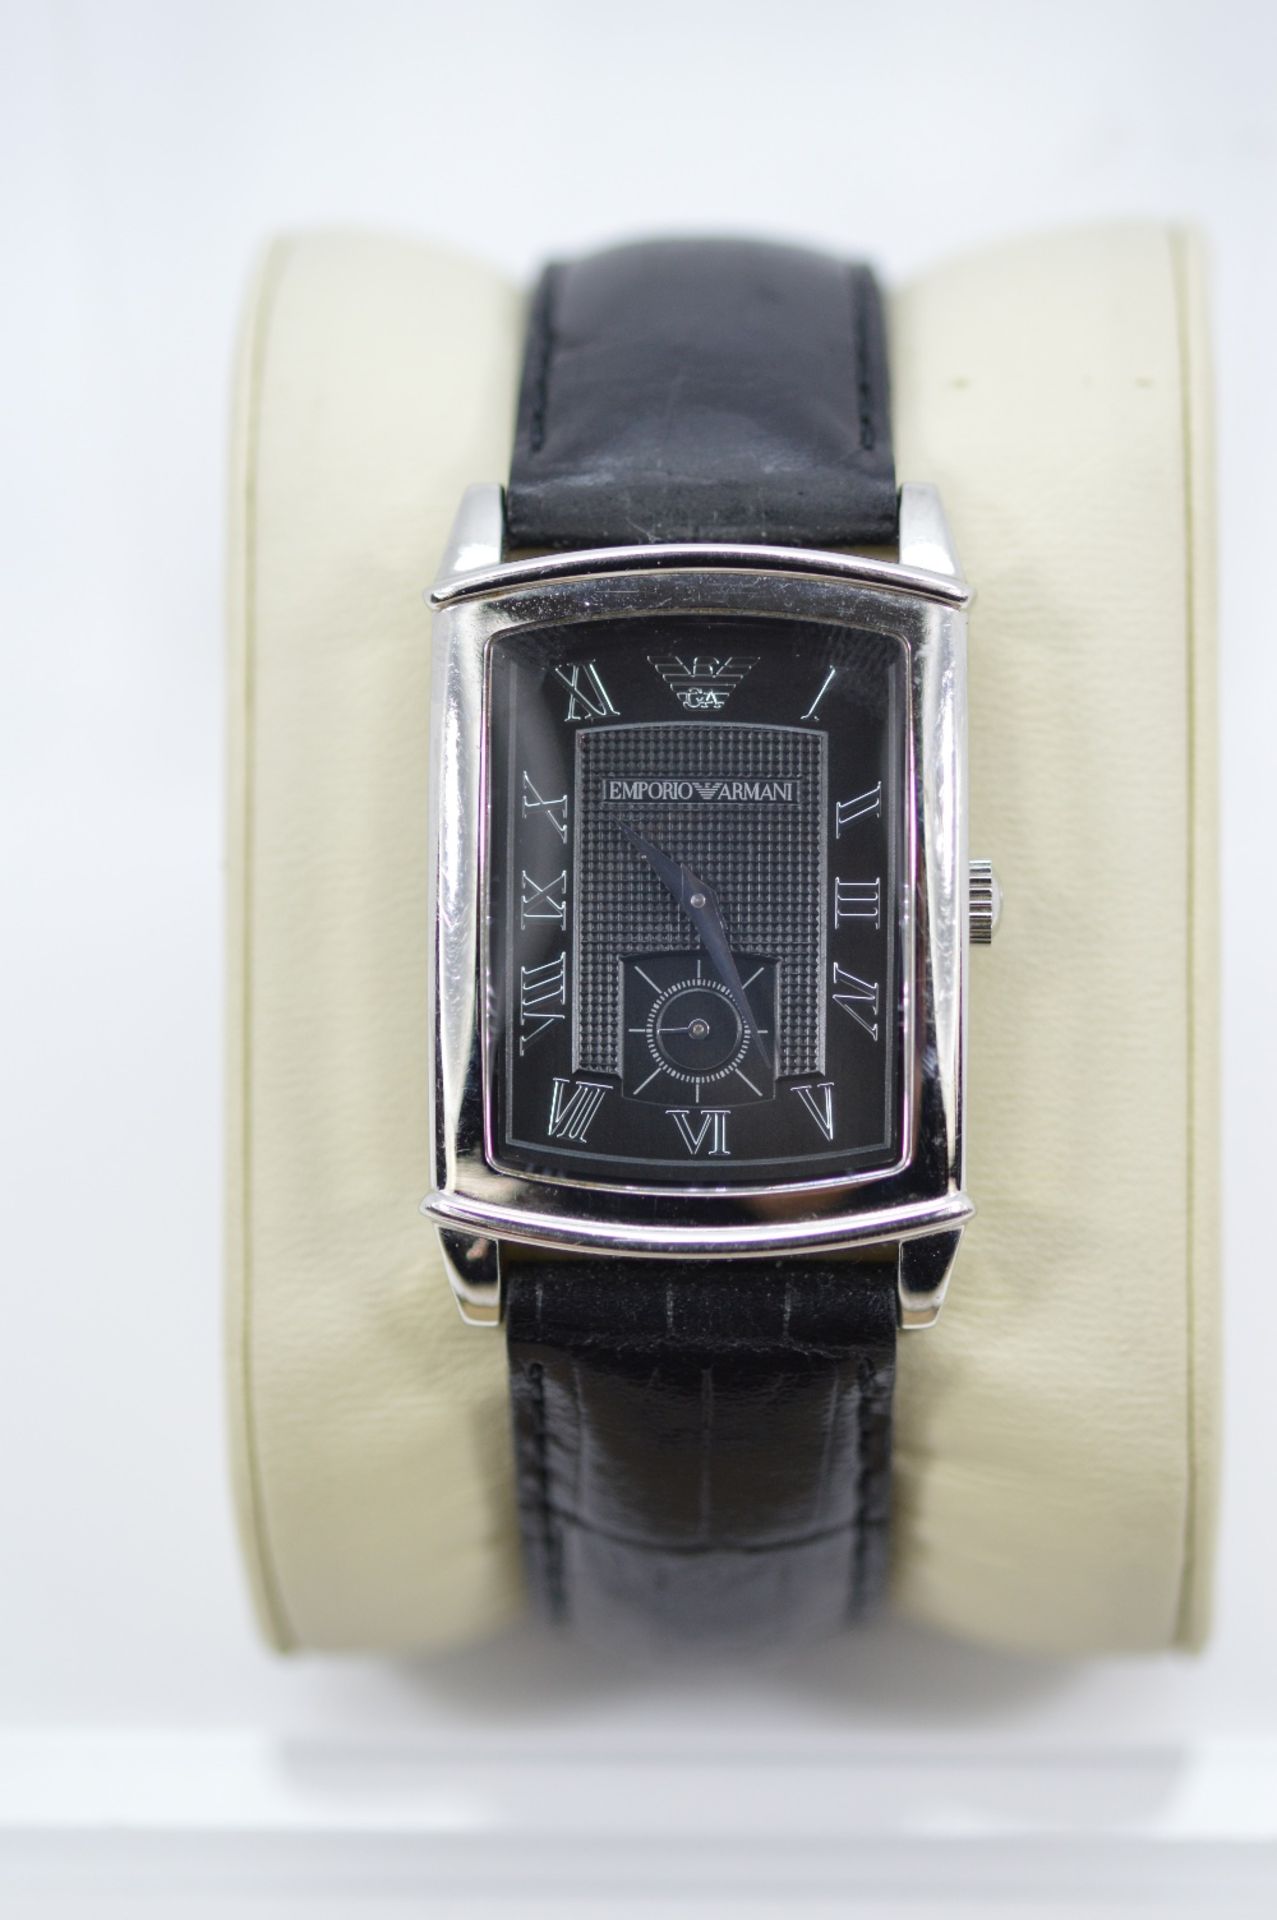 Gents Armani watch AR 0239 model ,new battery installed